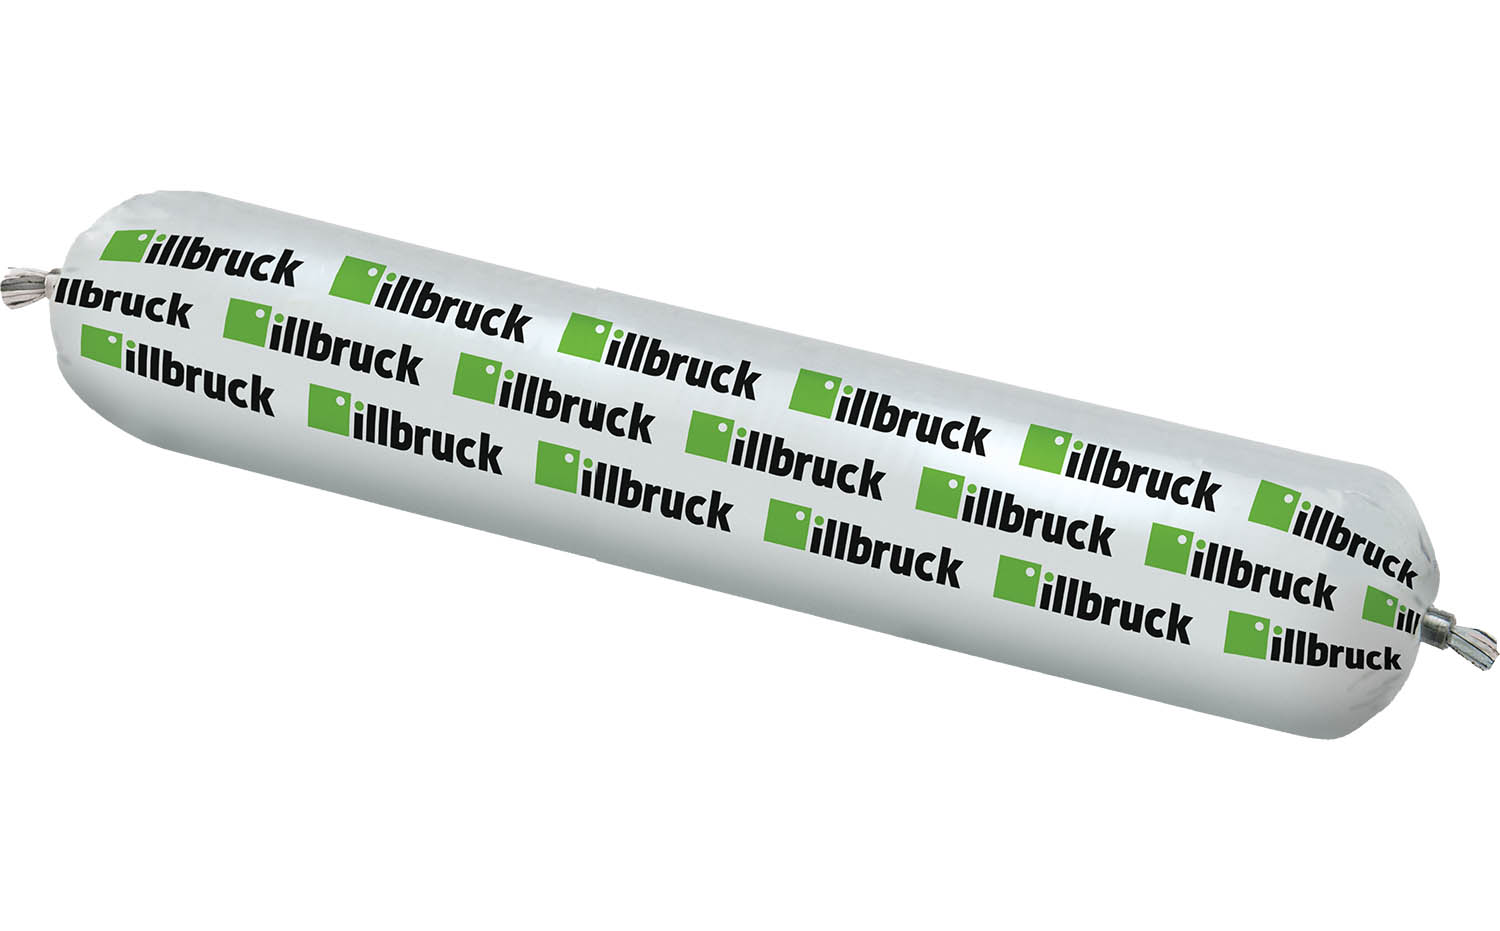 New illbruck multi purpose adhesive 1